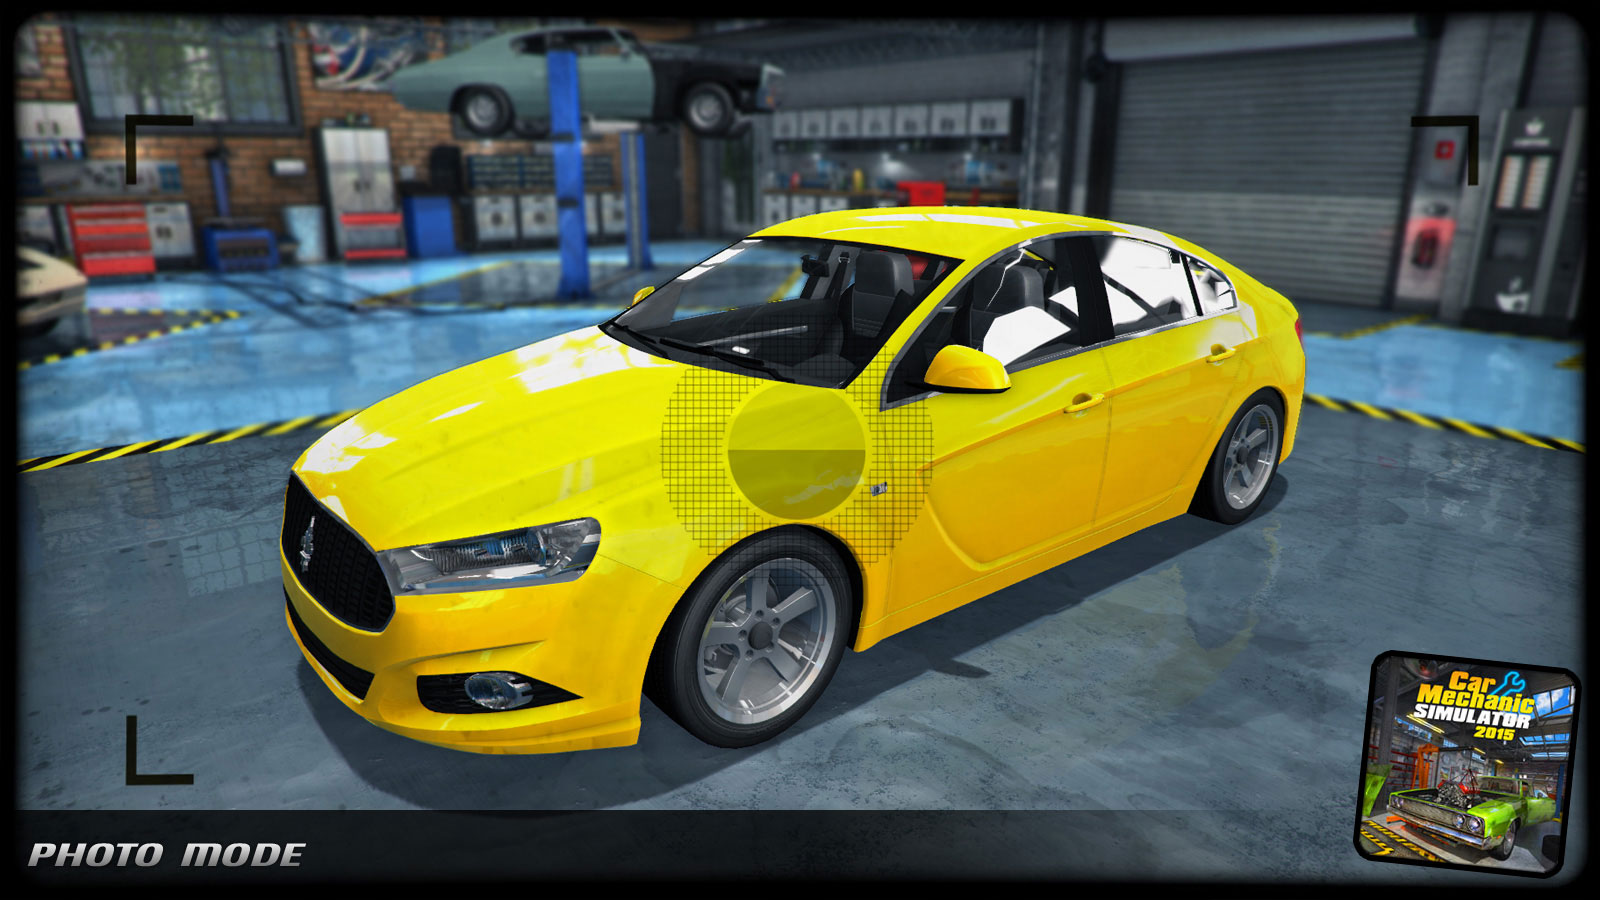 car mechanic simulator 2015 save game location